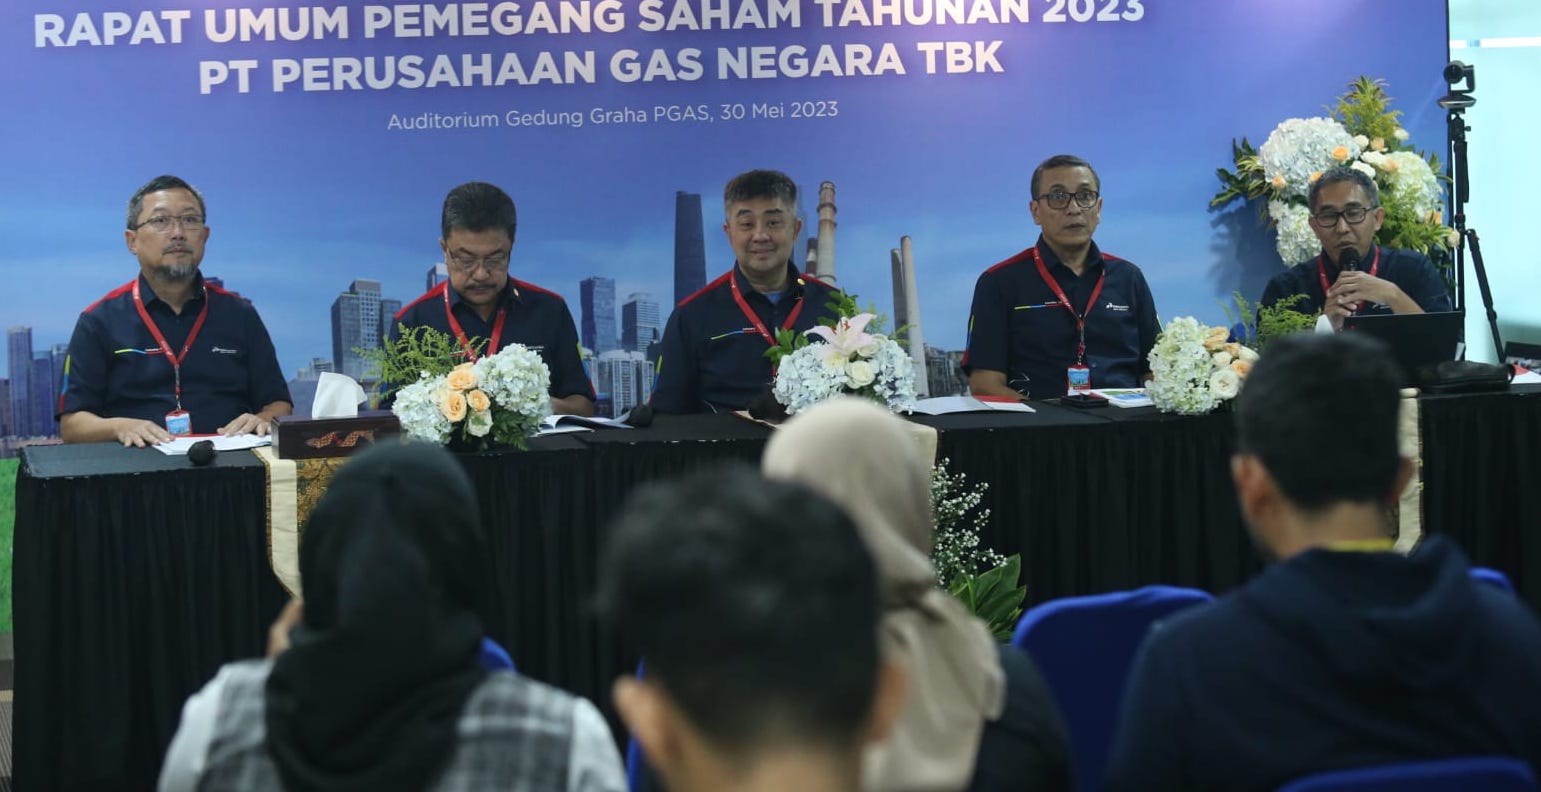 Jelang Jatuh Tempo, Perusahaan Gas Negara (PGAS) Buyback Obligasi USD499,85 Juta